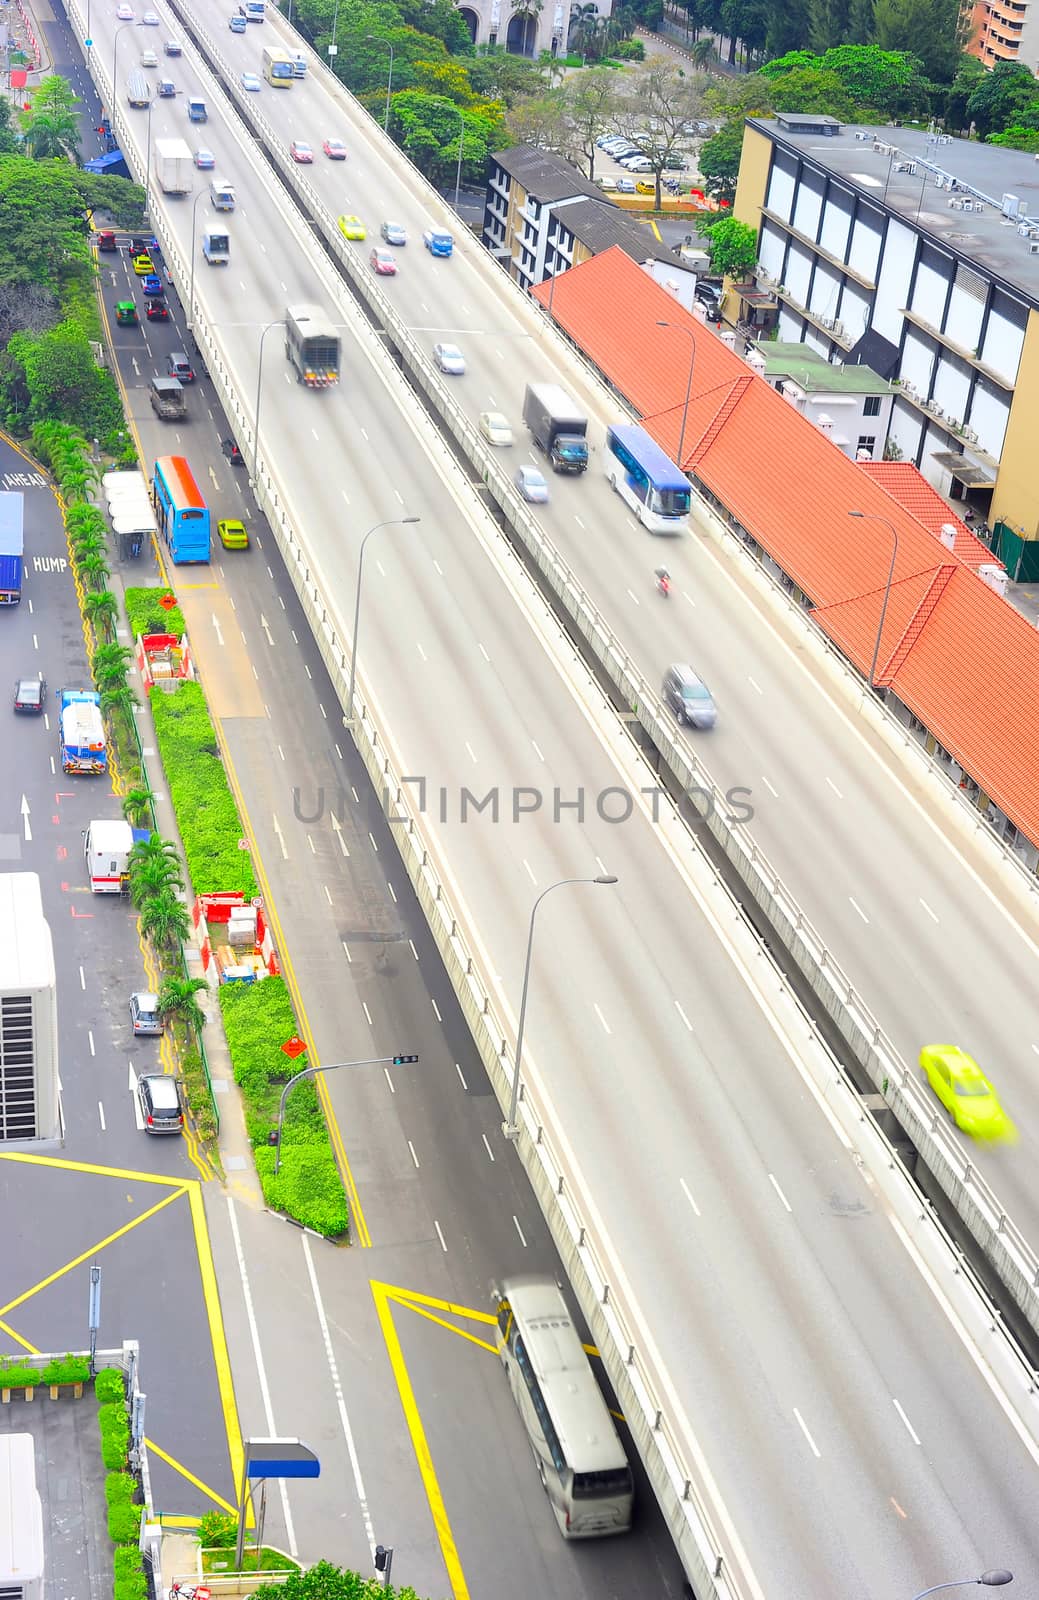 Traffic in Singapore by joyfull